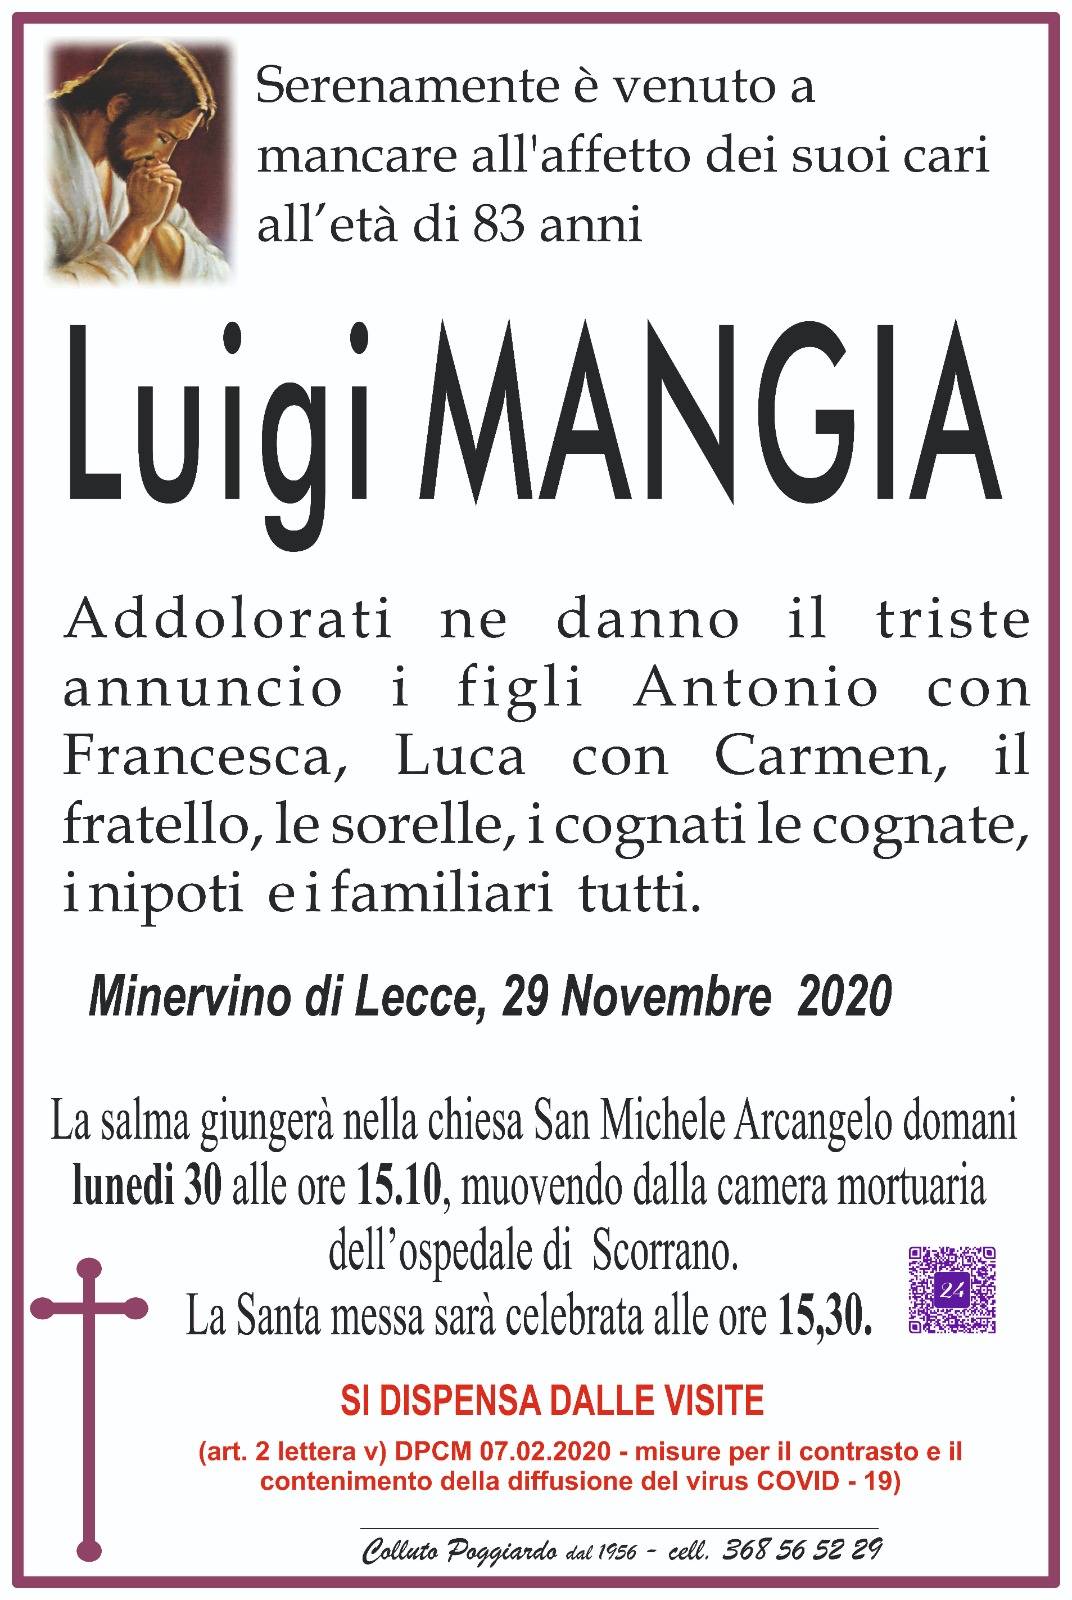 Luigi Mangia